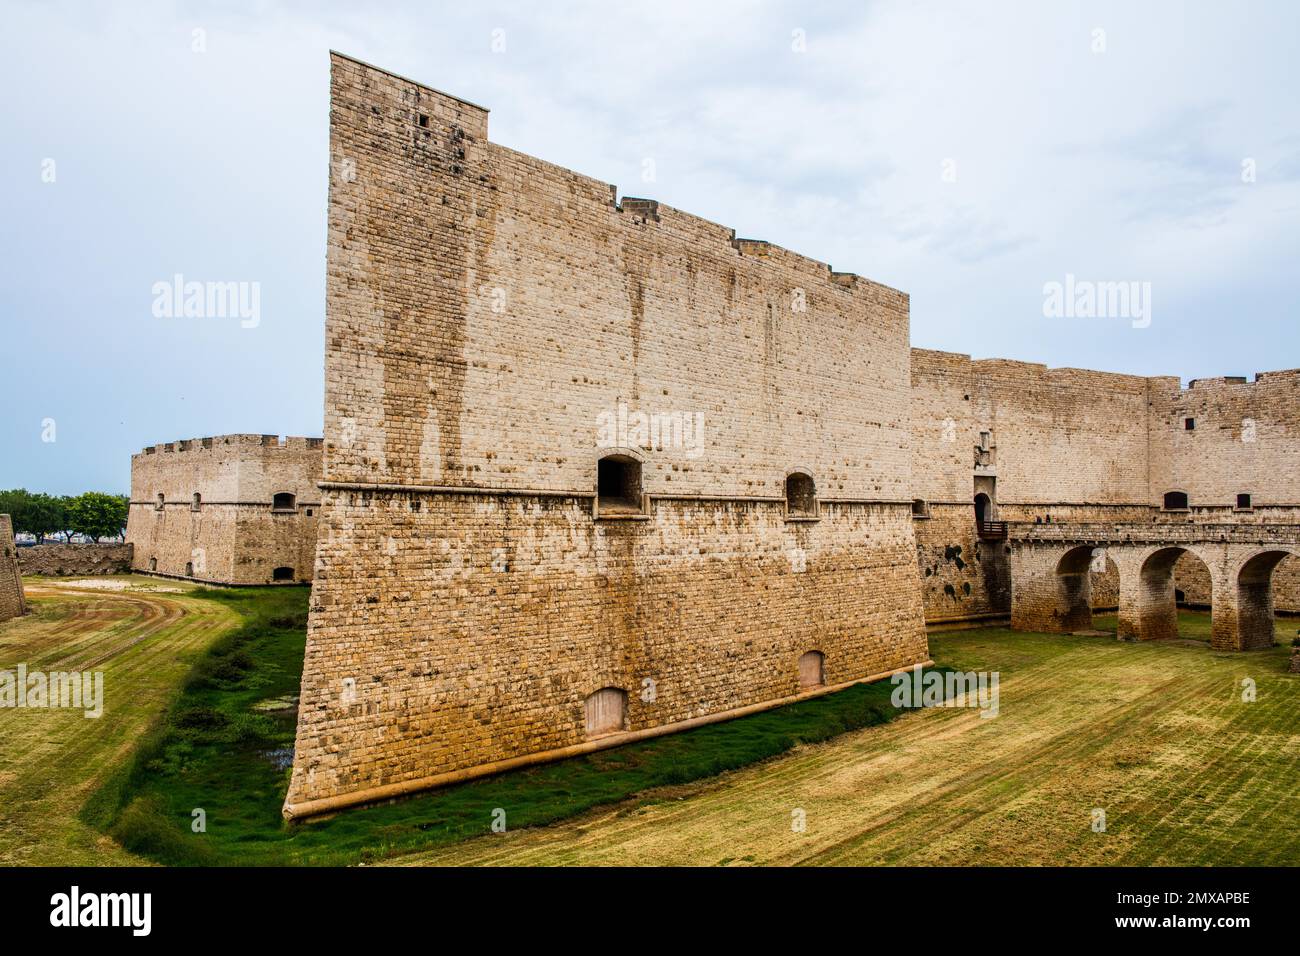 Barletta, Apulien, Barletta, Apulien, Italien, Staufer-Festung aus dem 10. Jahrhundert Stockfoto